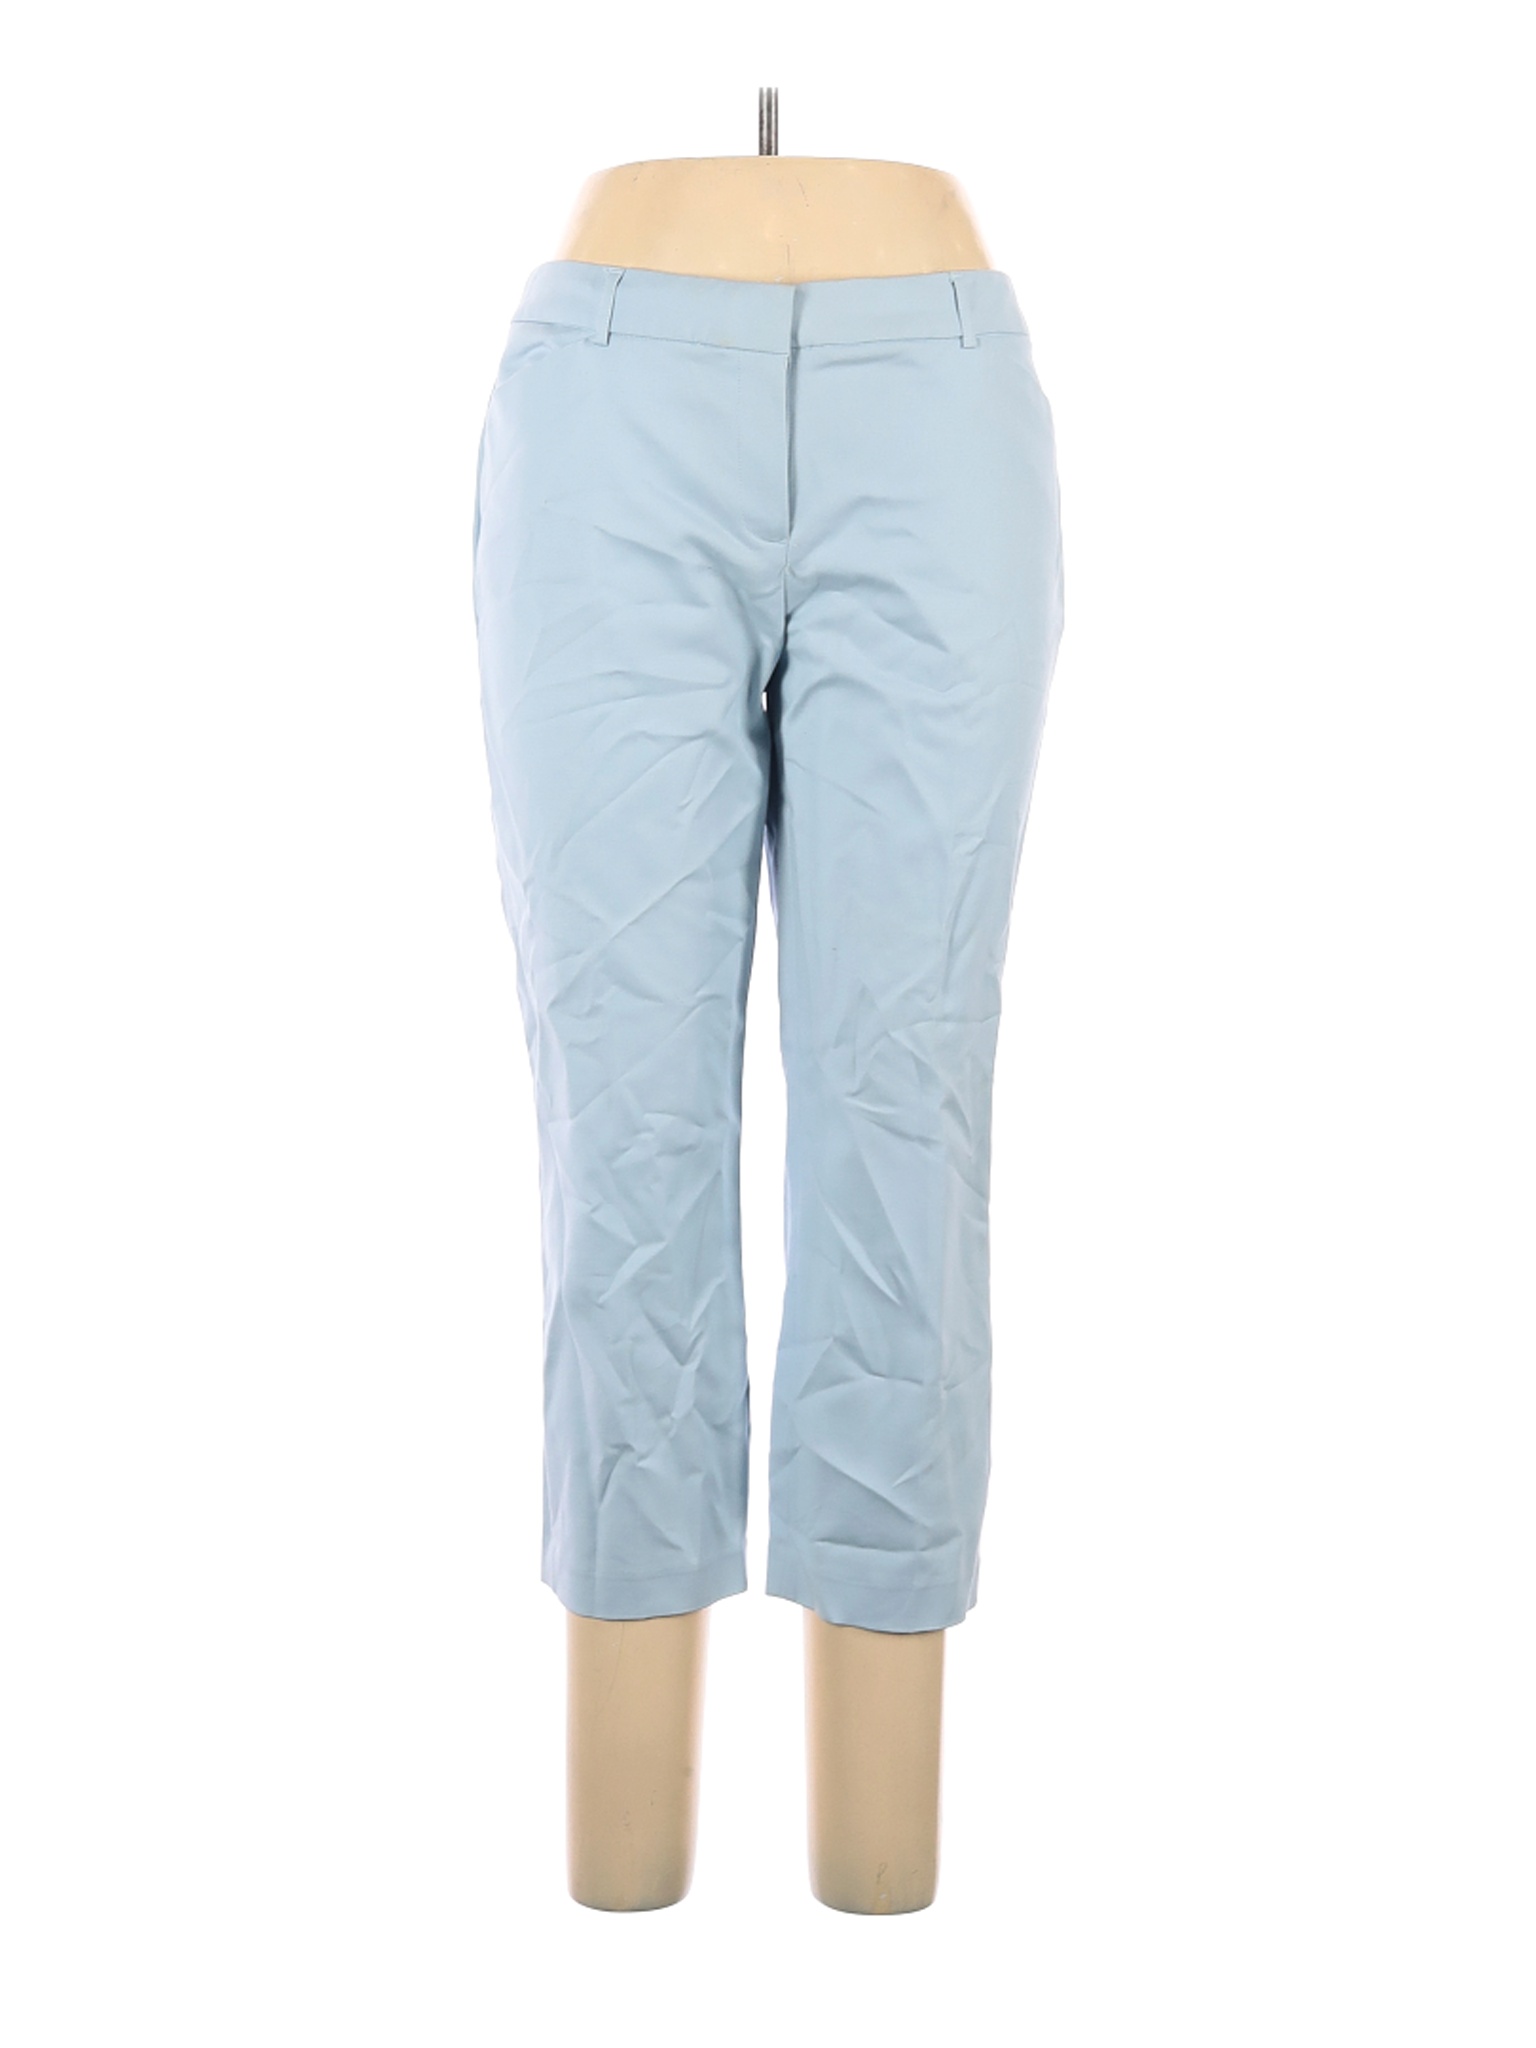 NWT Dalia Women Blue Dress Pants 12 | eBay